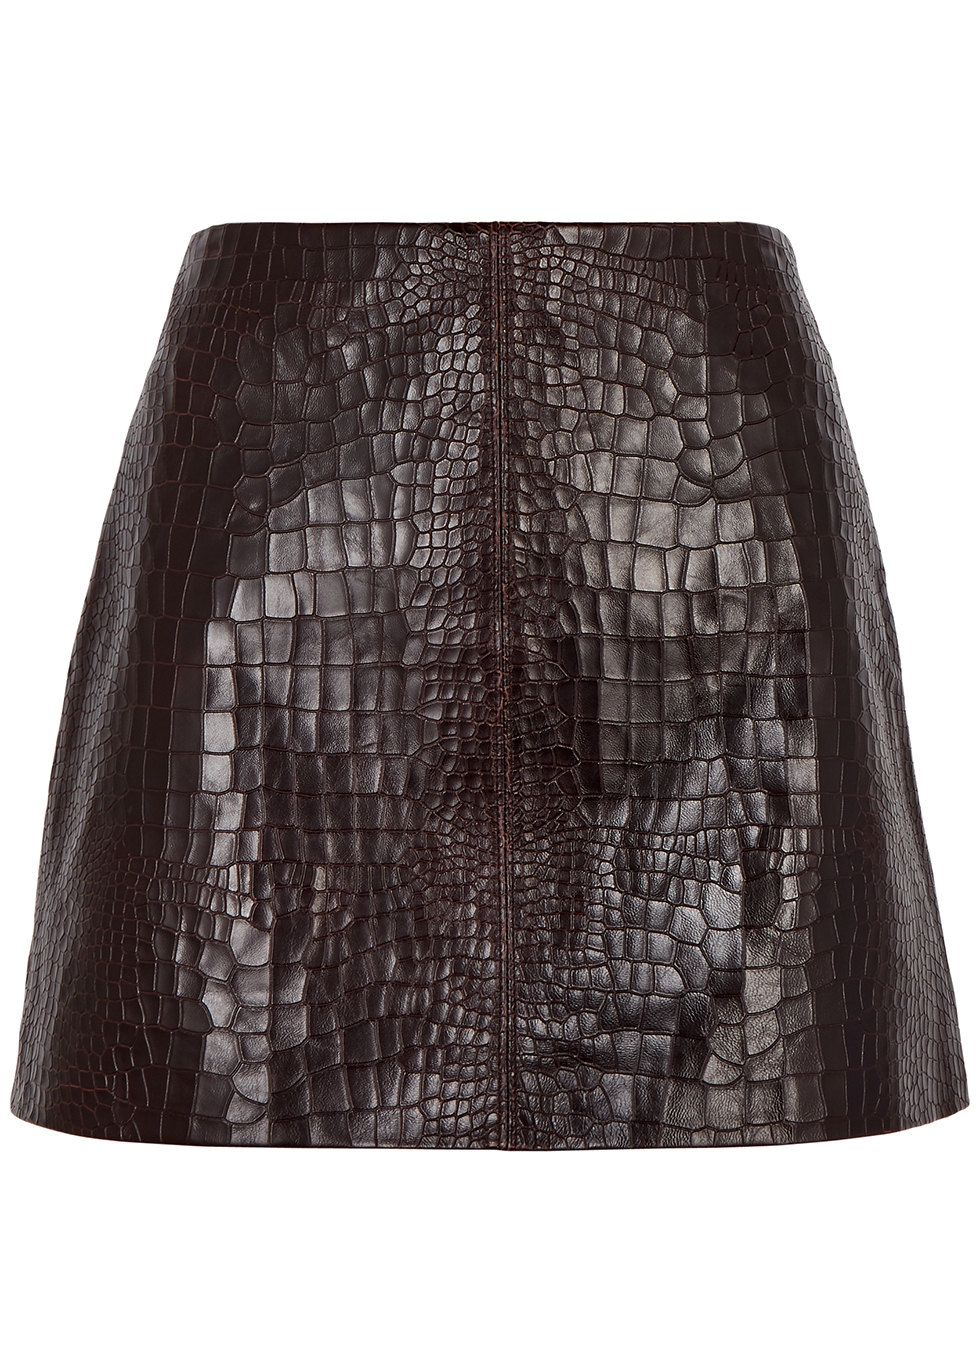 Riley crocodile-effect leather mini skirt